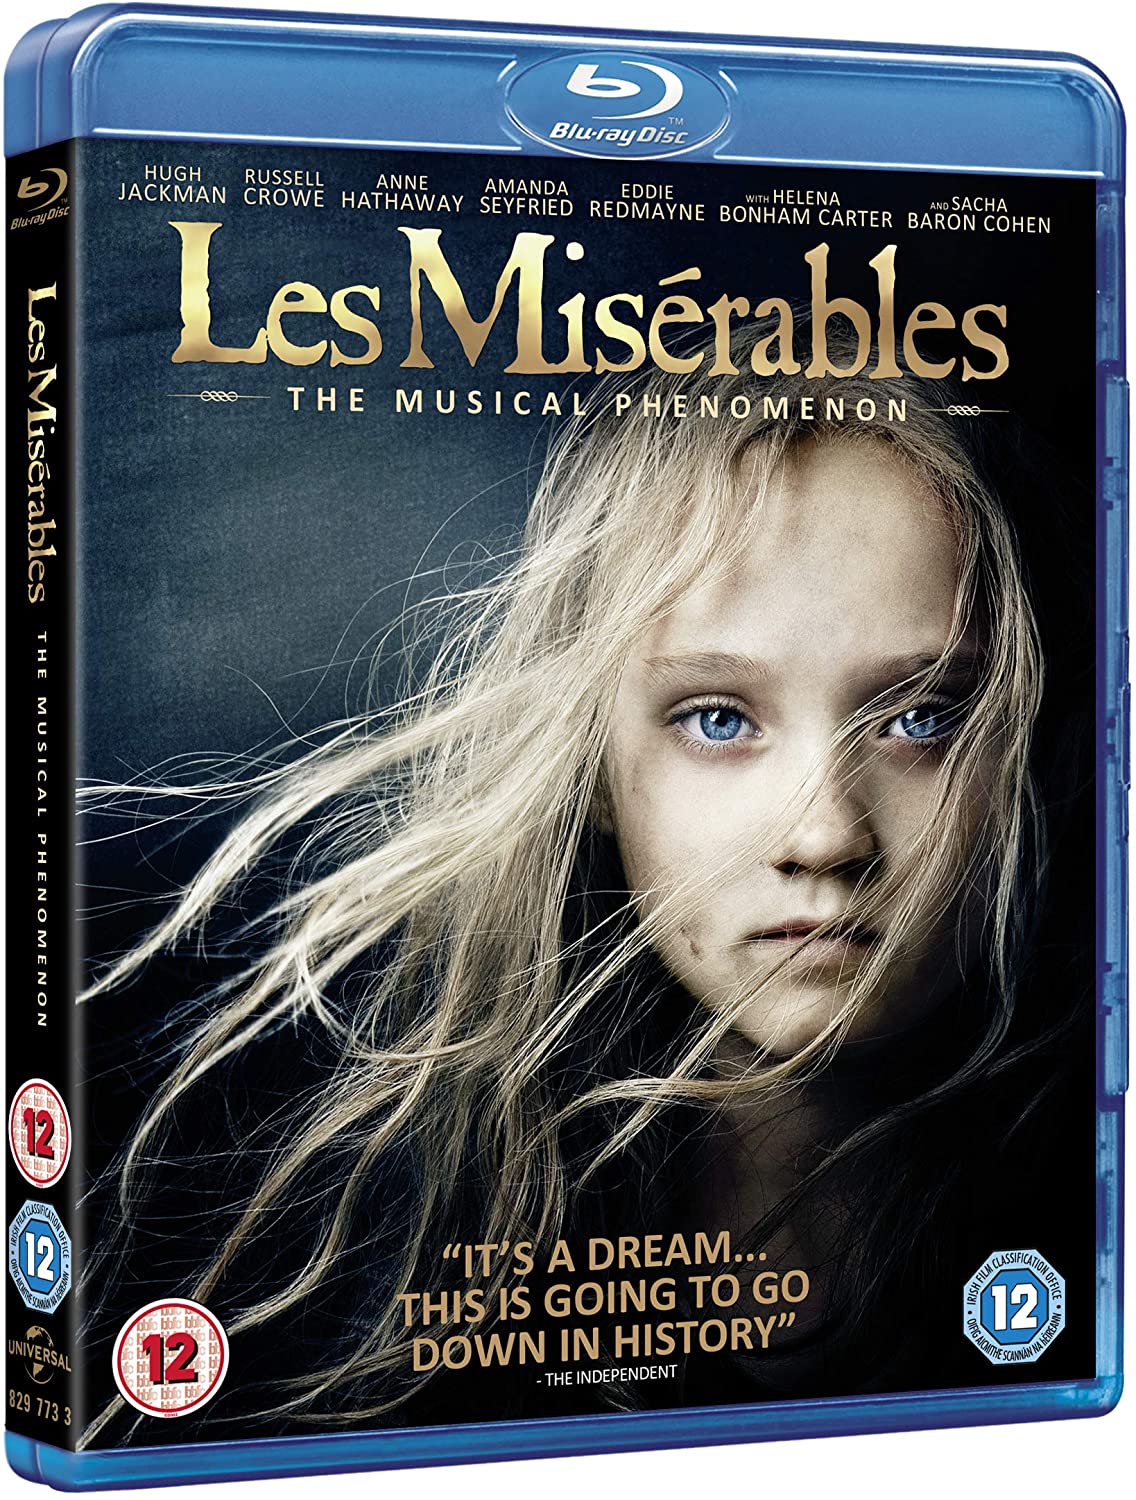 Les Misérables [2013] (Blu-ray)